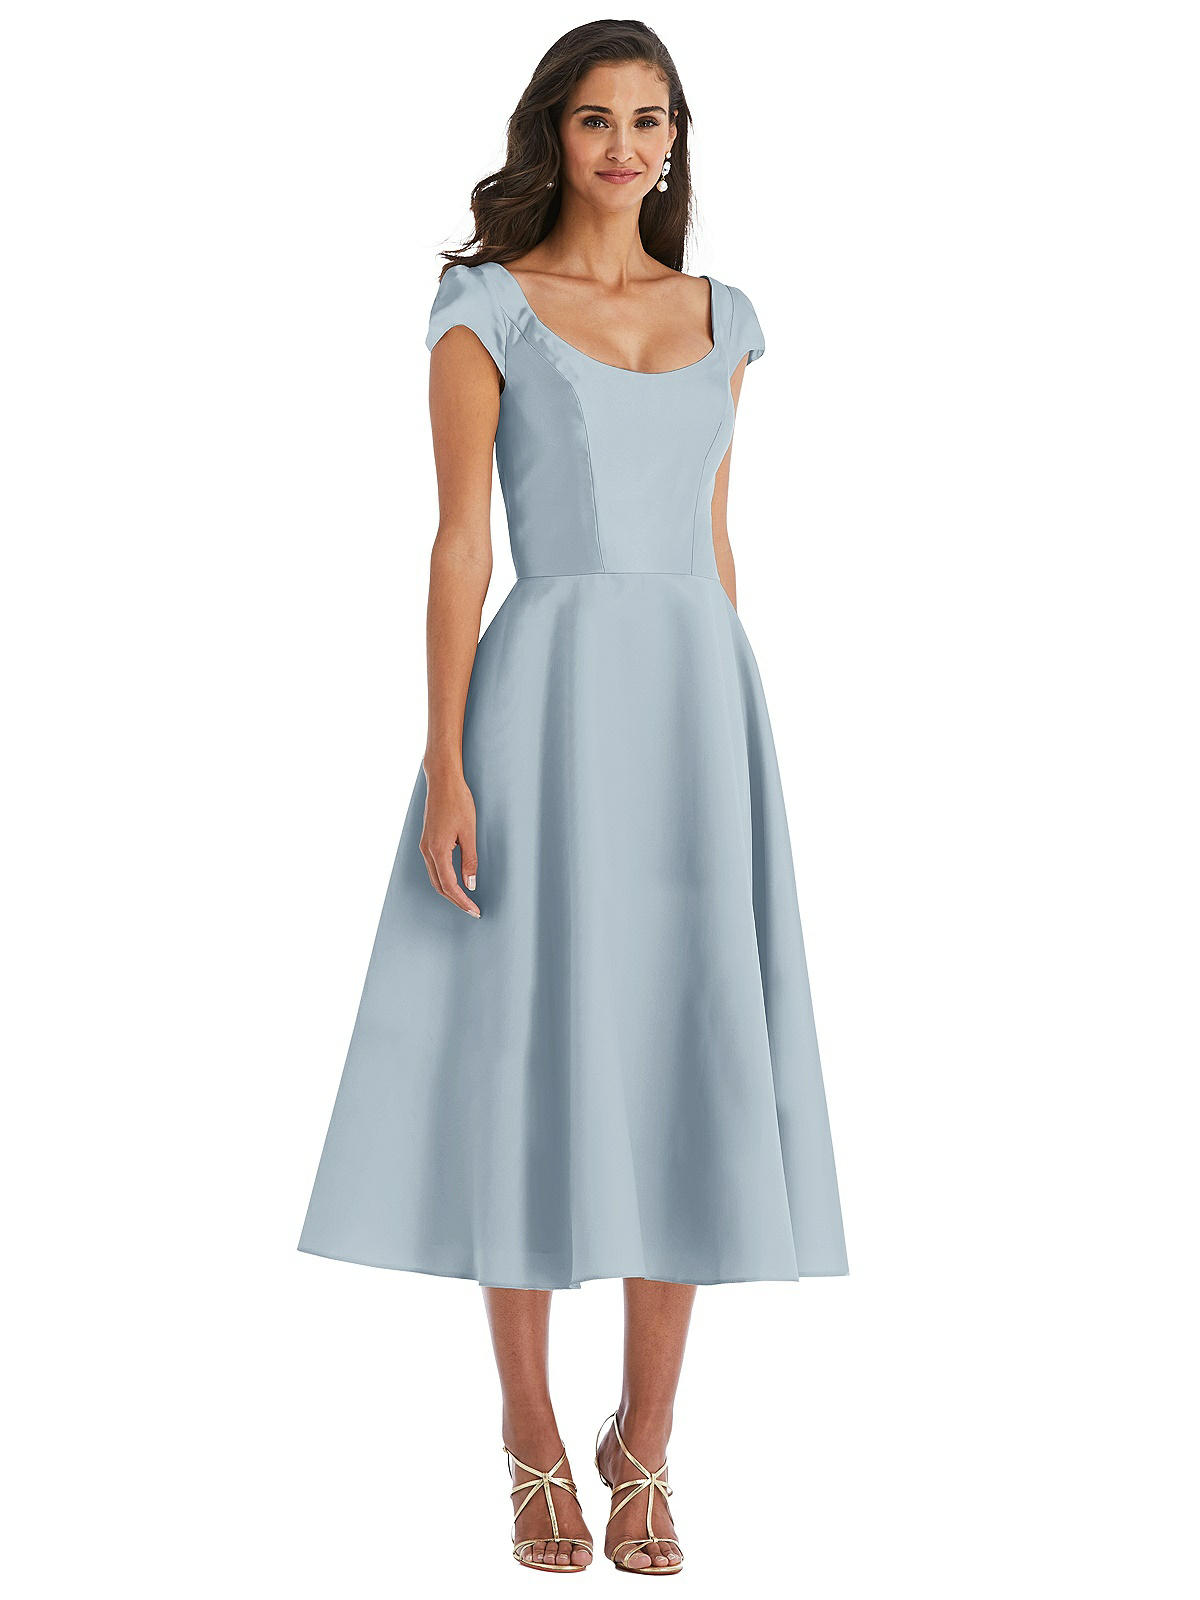 Vintage Style Dresses | Vintage Inspired Dresses Puff Cap Sleeve Full Skirt Satin Midi Dress  AT vintagedancer.com